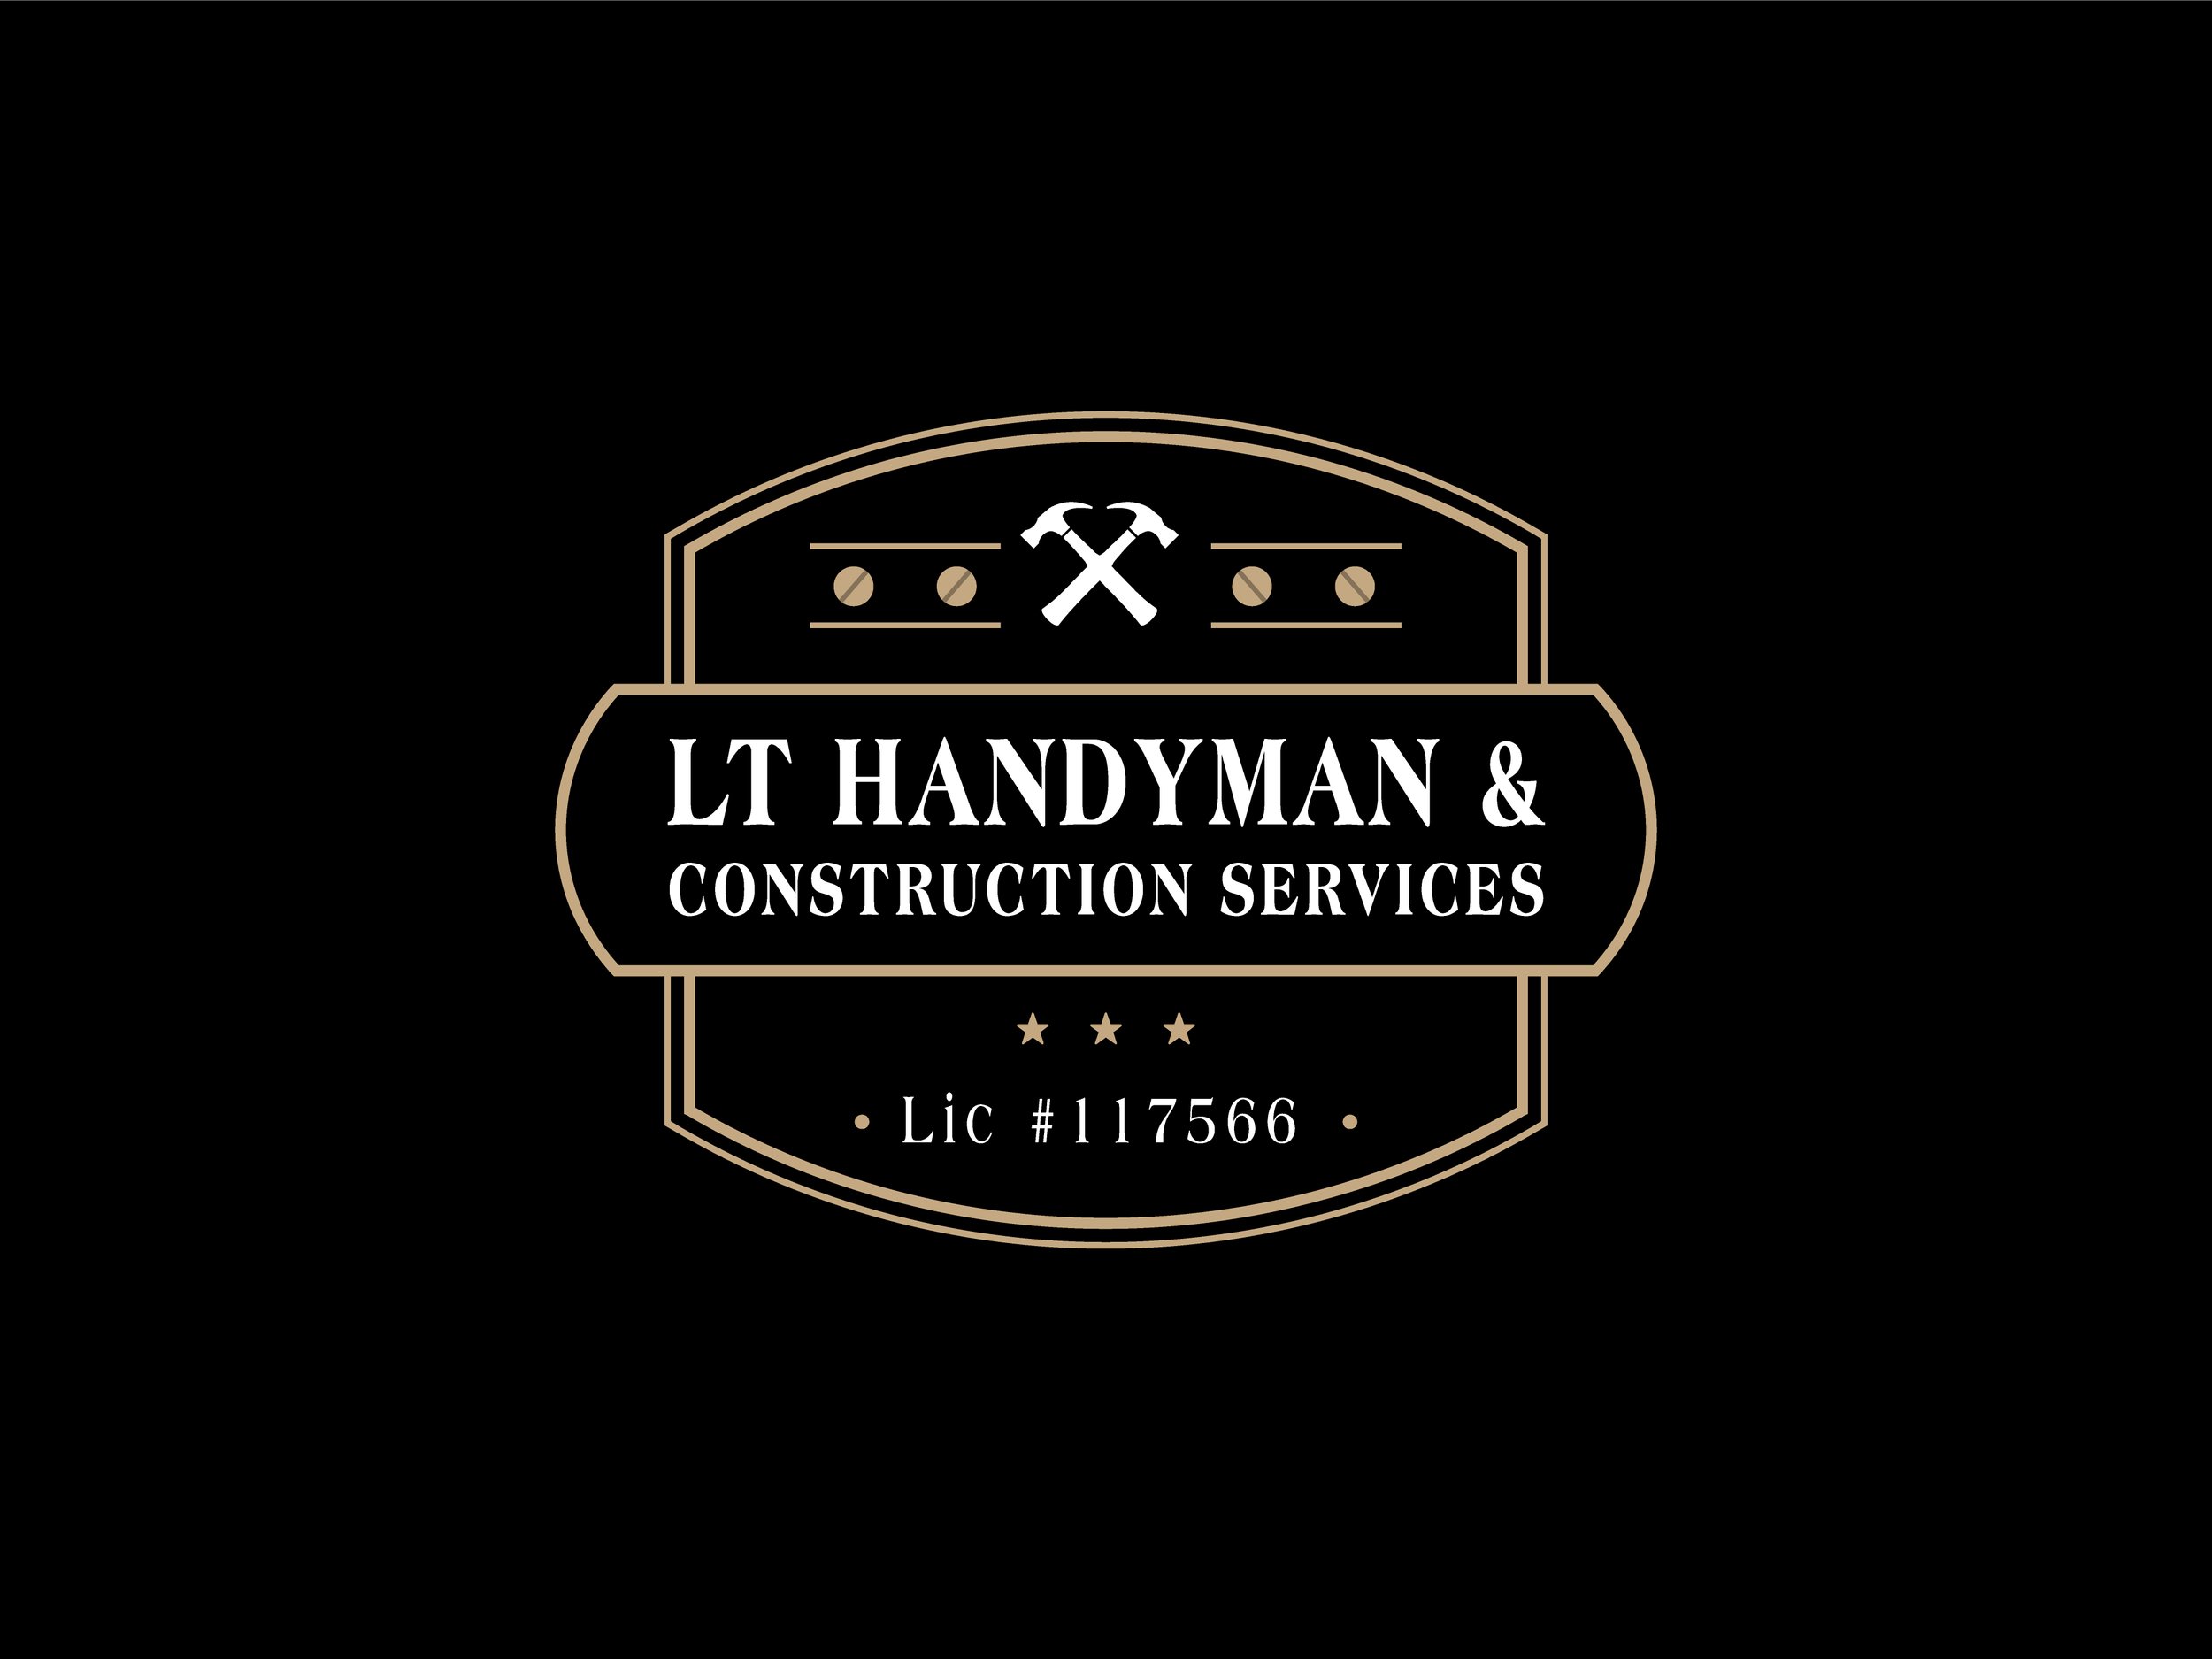 LT Handyman